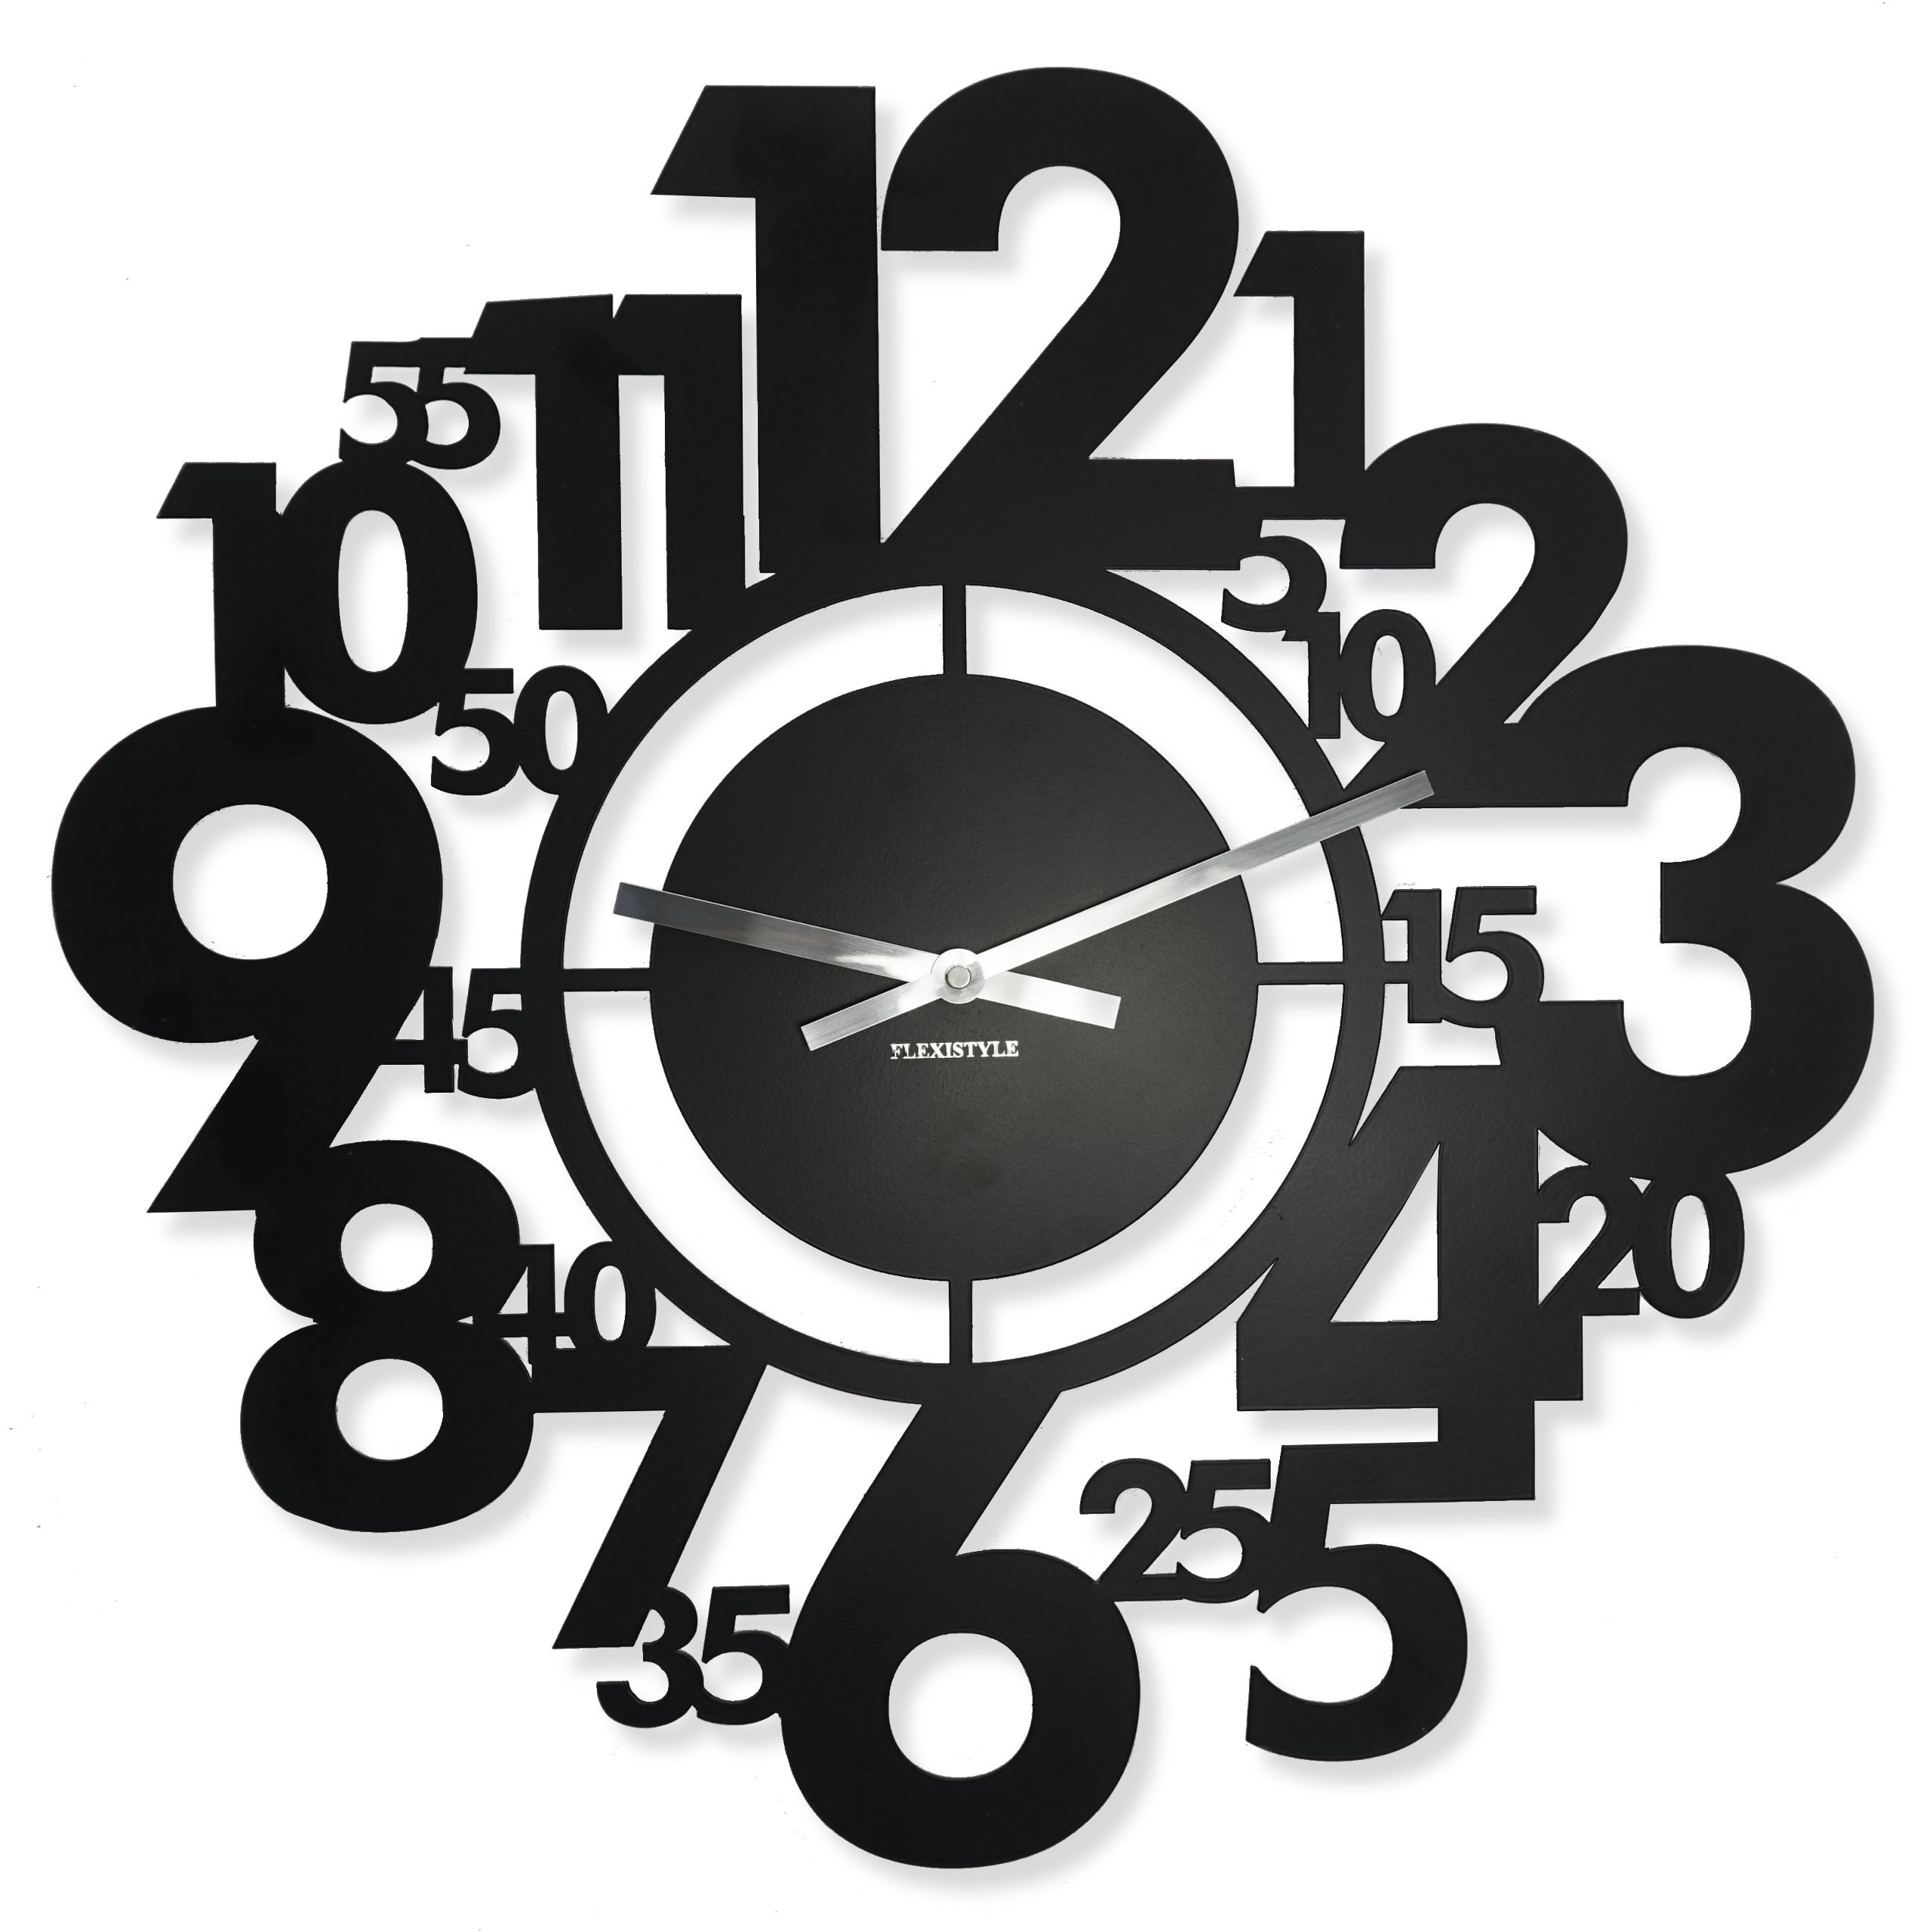 Цифры на часах разные. Часы настенные. Креативные настенные часы. Часы настенные металлические. Часы настенные со стрелками и цифрами.